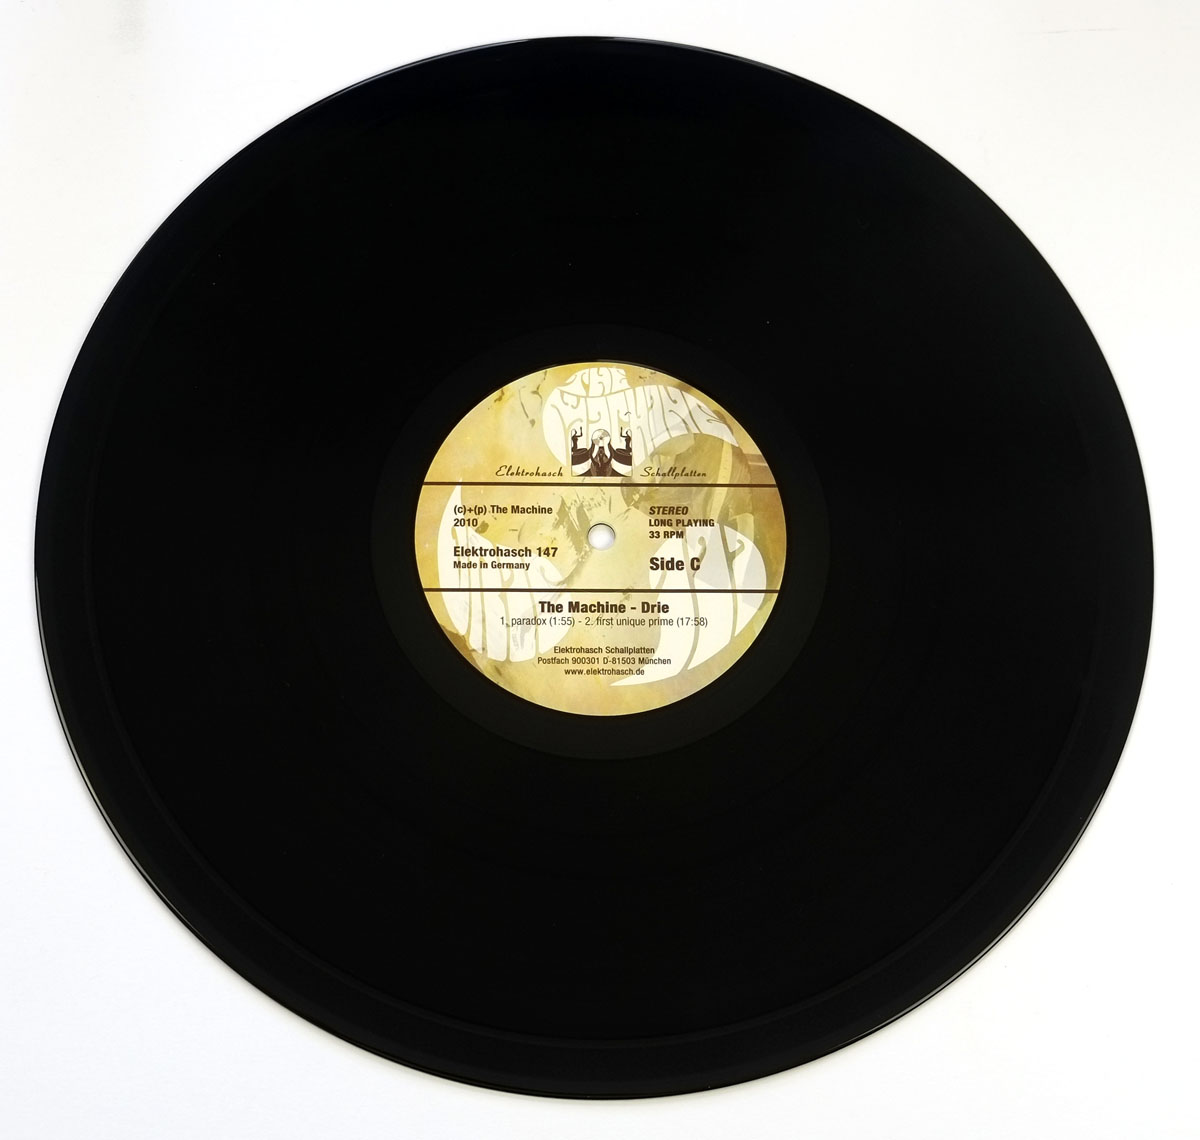 THE MACHINE - Drie vinyl lp record 